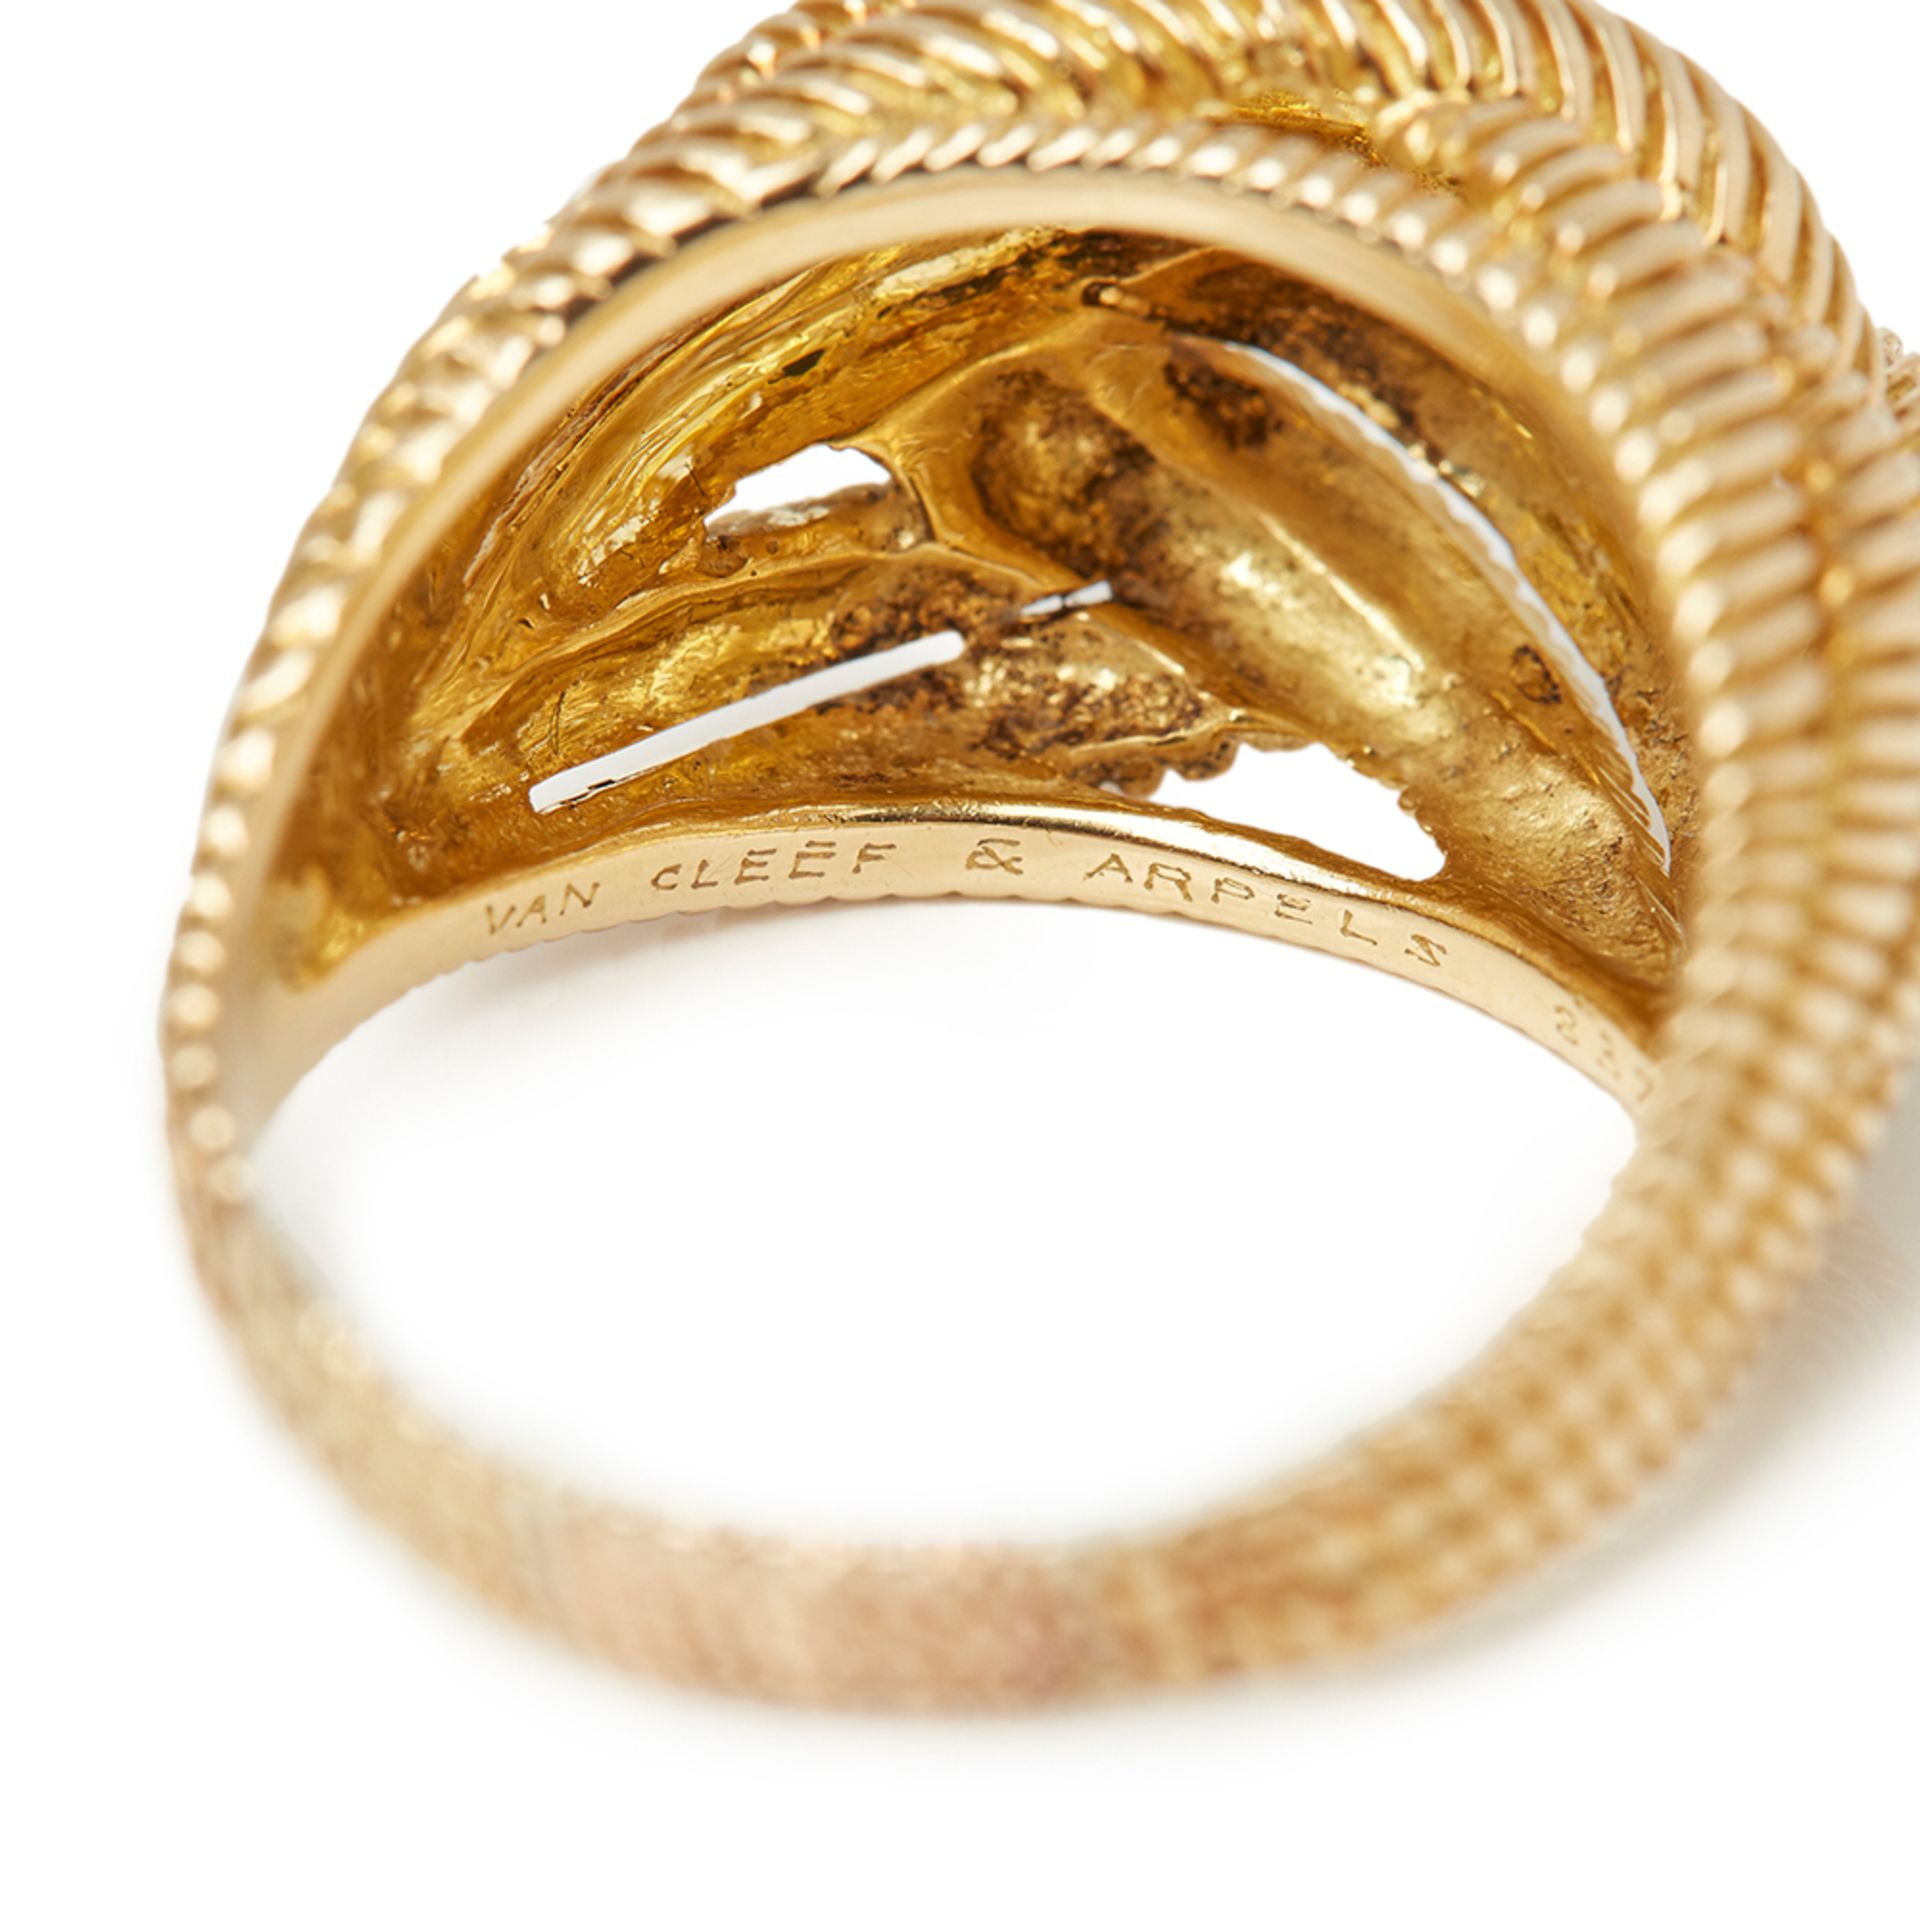 Van Cleef & Arpels 18k Yellow Gold Rope Twist Design Bombe Ring - Image 5 of 8